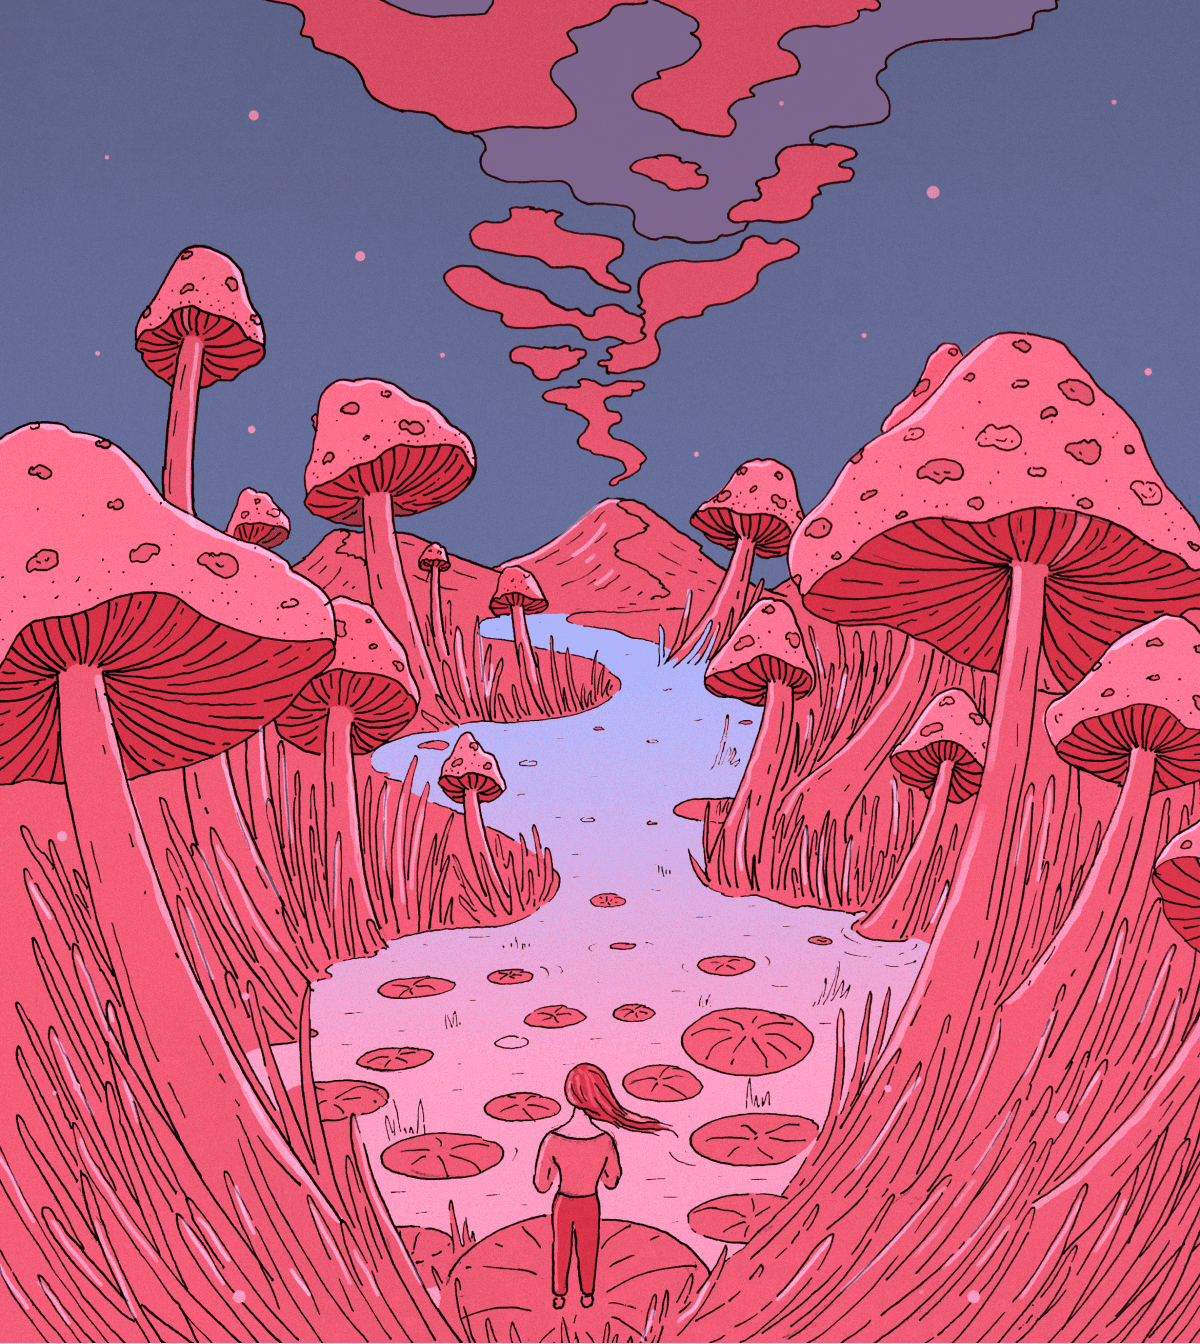 A mushroom forest